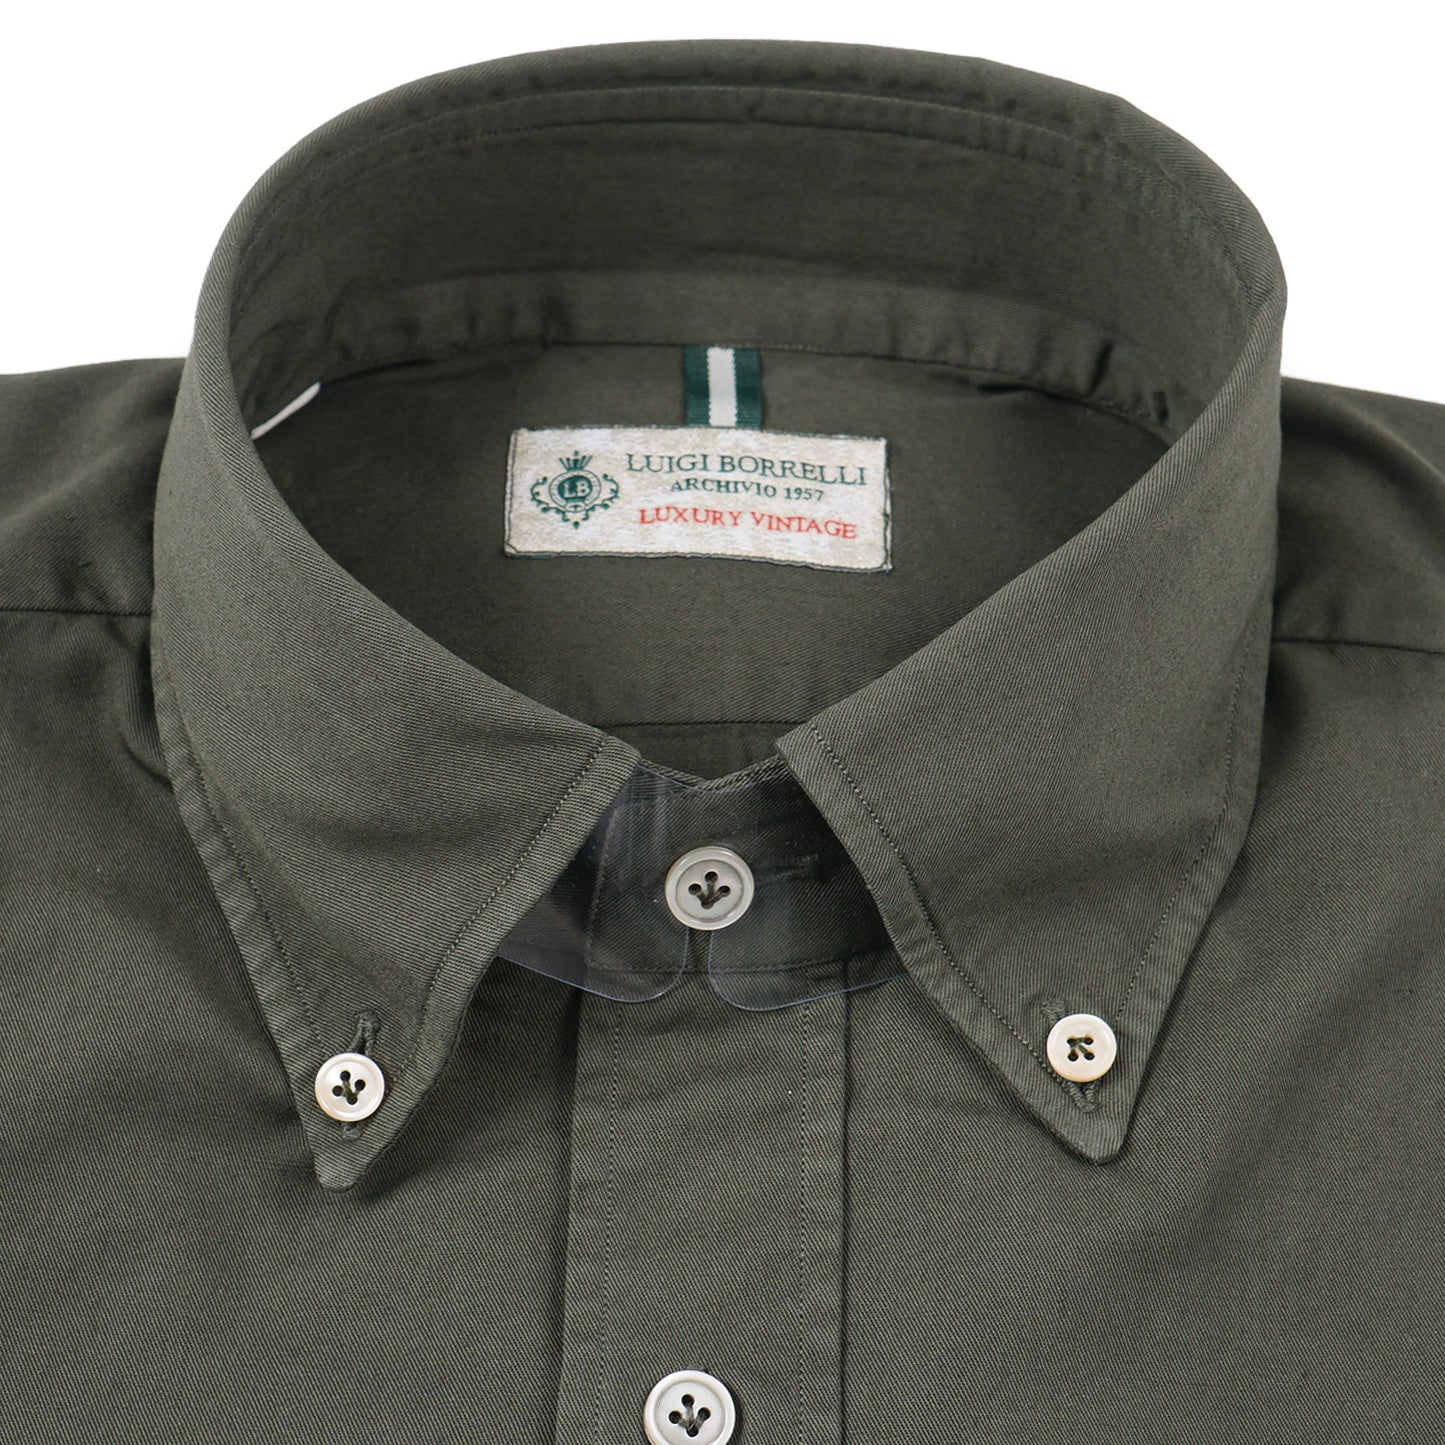 Luigi Borrelli Brushed Twill Cotton Shirt - Top Shelf Apparel